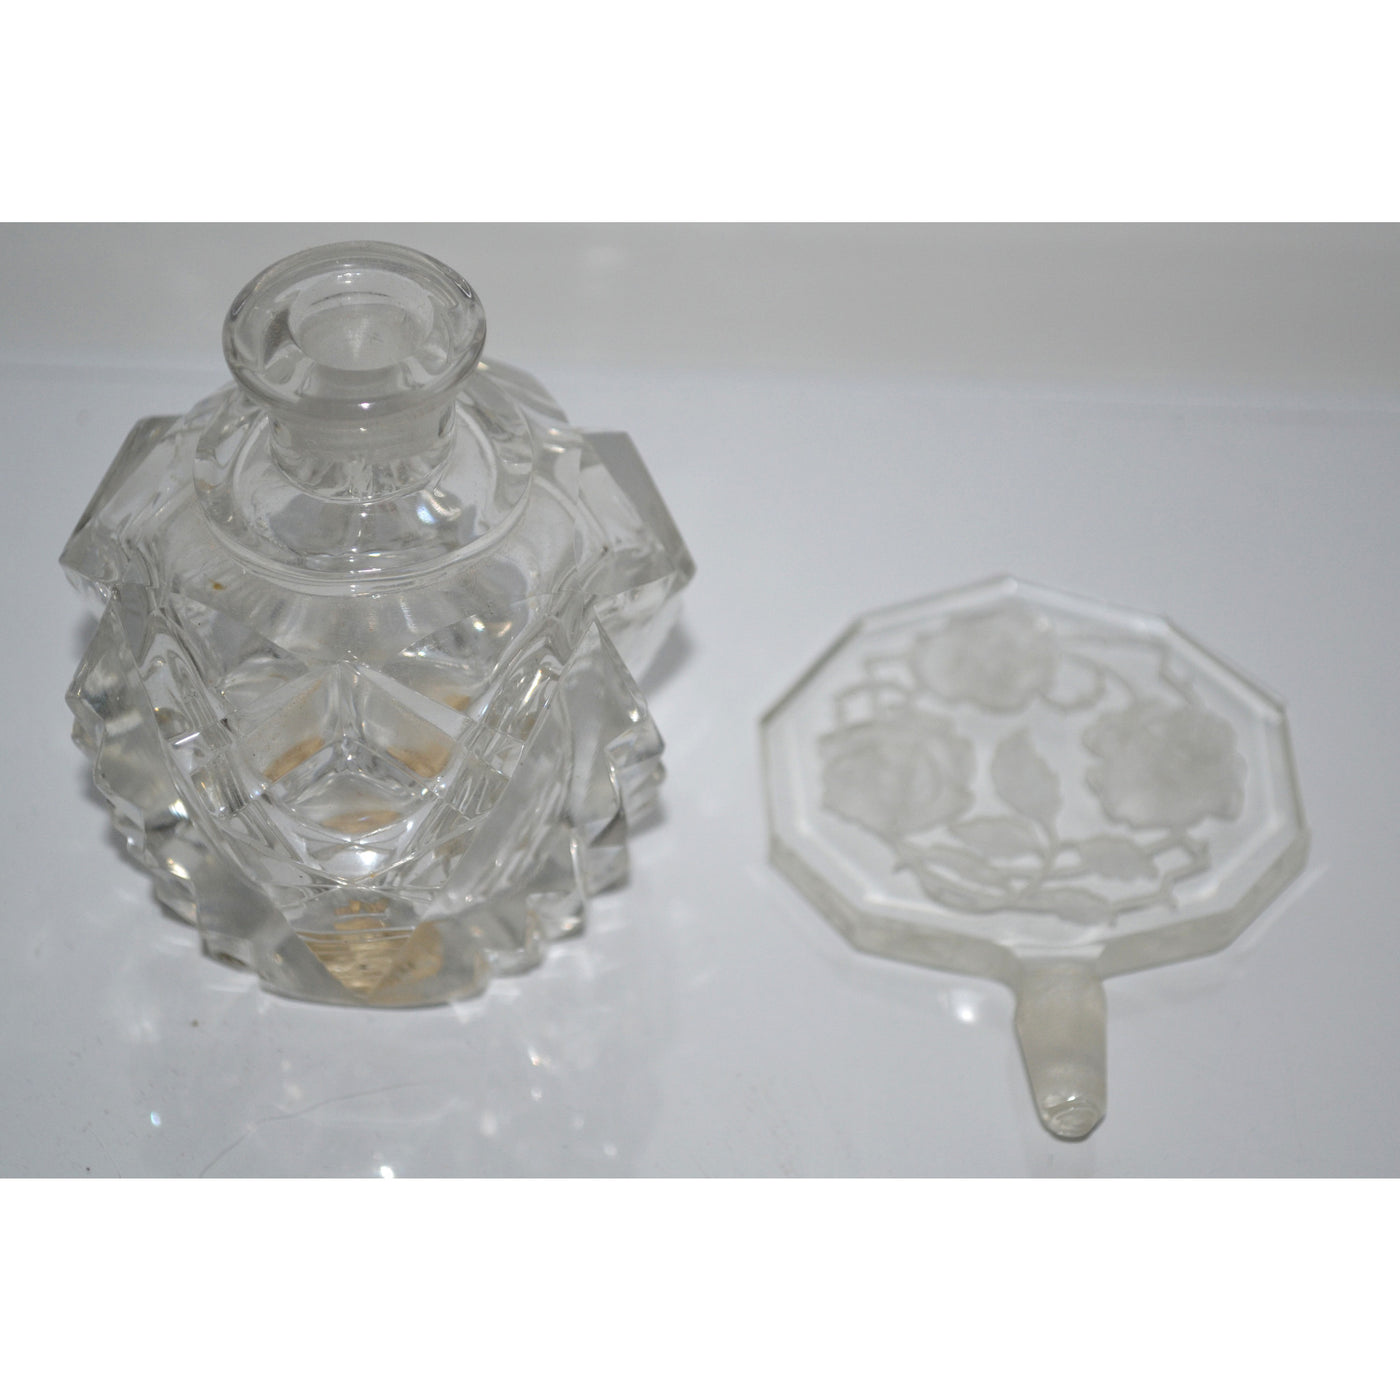 Vintage Morlee Czech Crystal Perfume Bottle